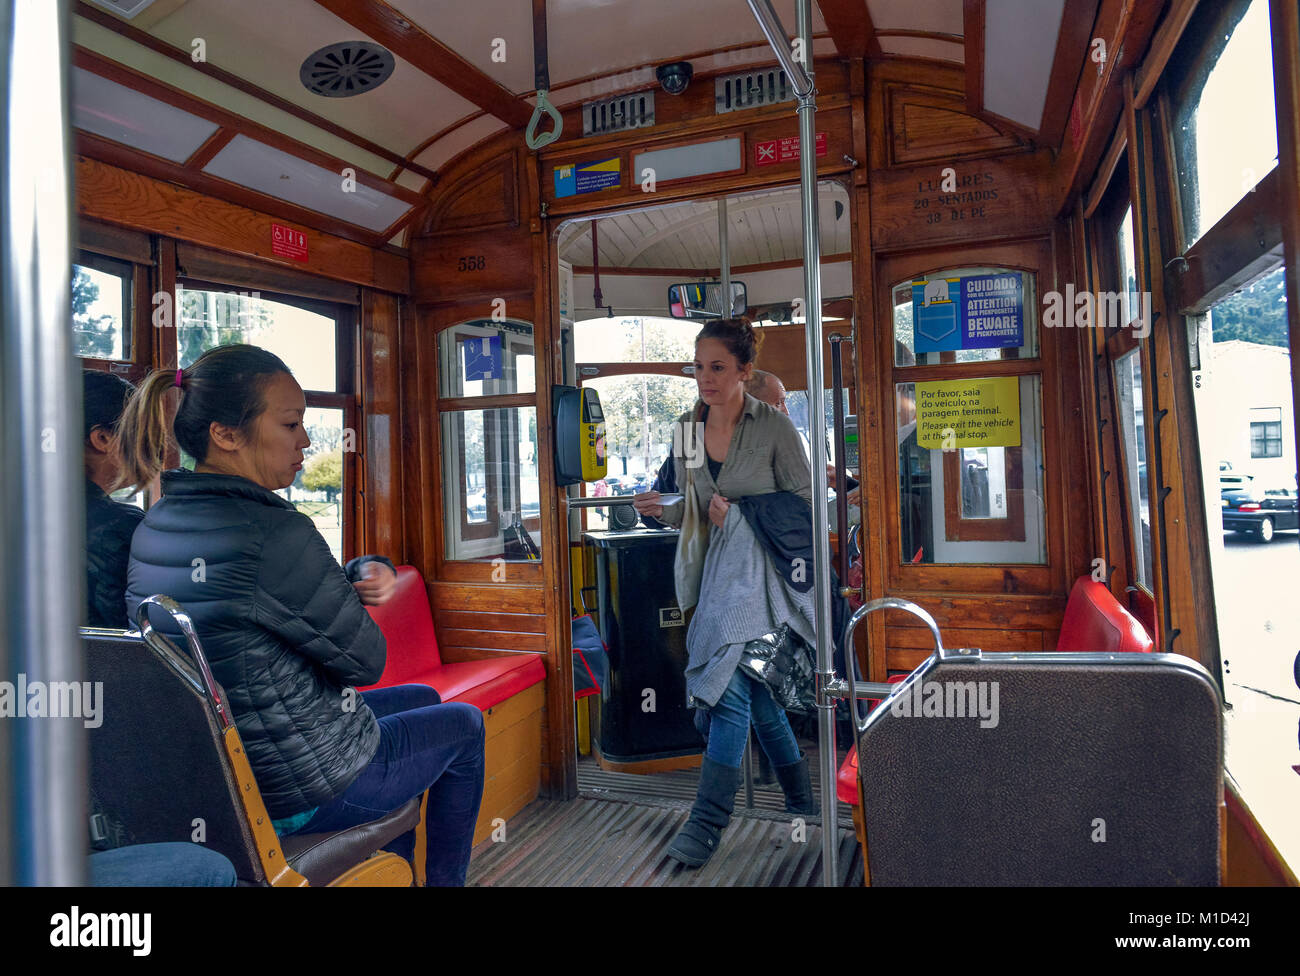 Tram 28, Lisbon, Portugal, Strassenbahn 28, Lissabon Stock Photo